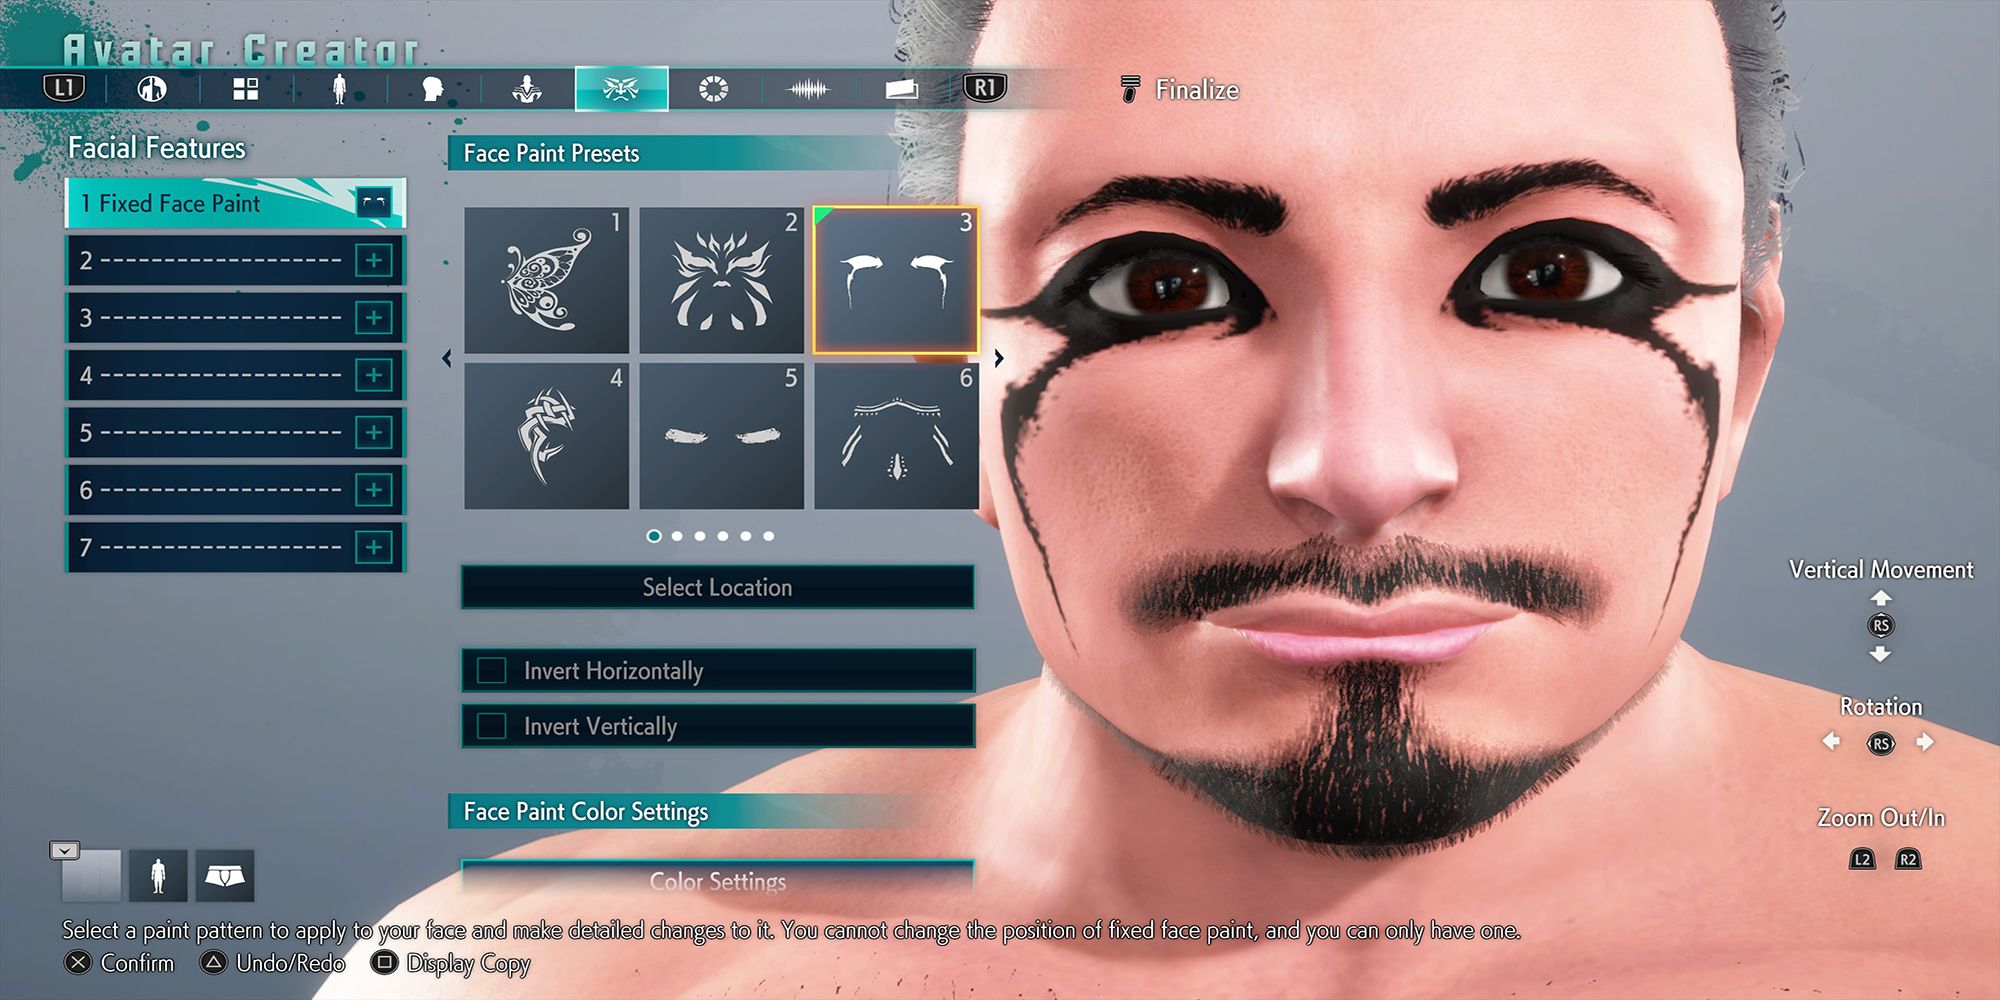 Chris Sanfilippo's avatar tries a smokey eye in Street Fighter 6's Avatar Facial Feature menu.